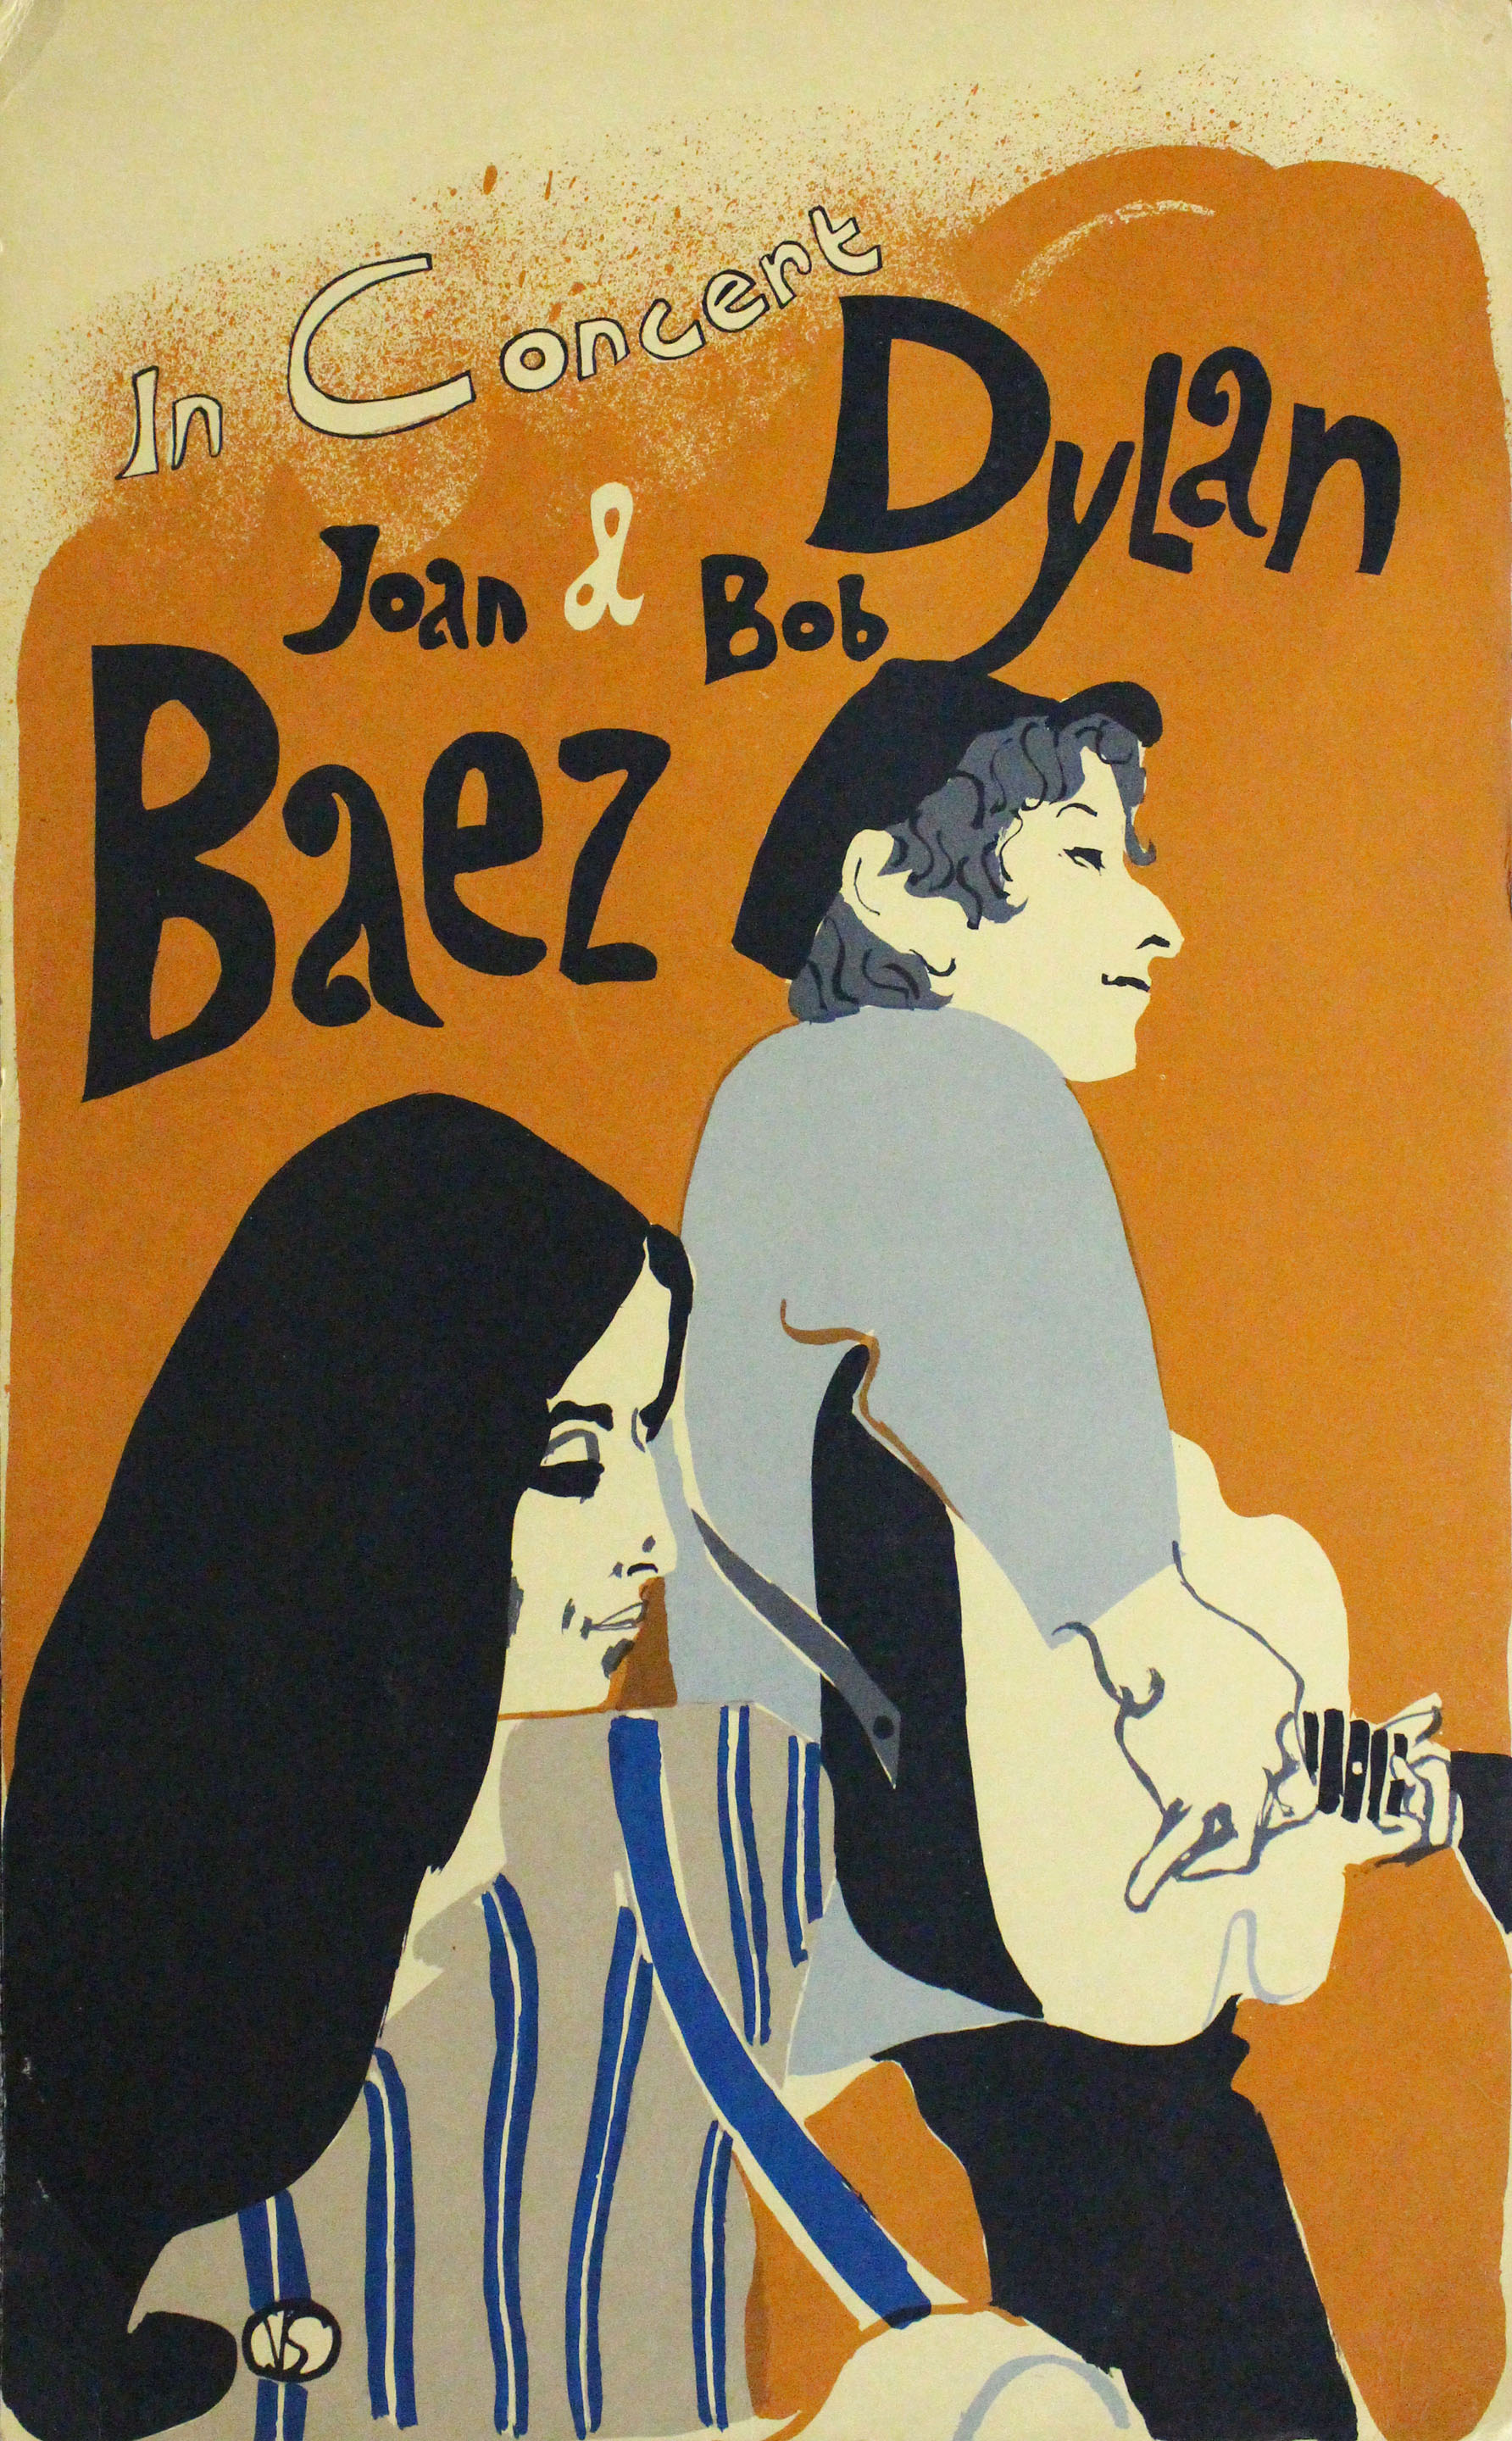 Bob Dylan And Joan Baez Concert Poster